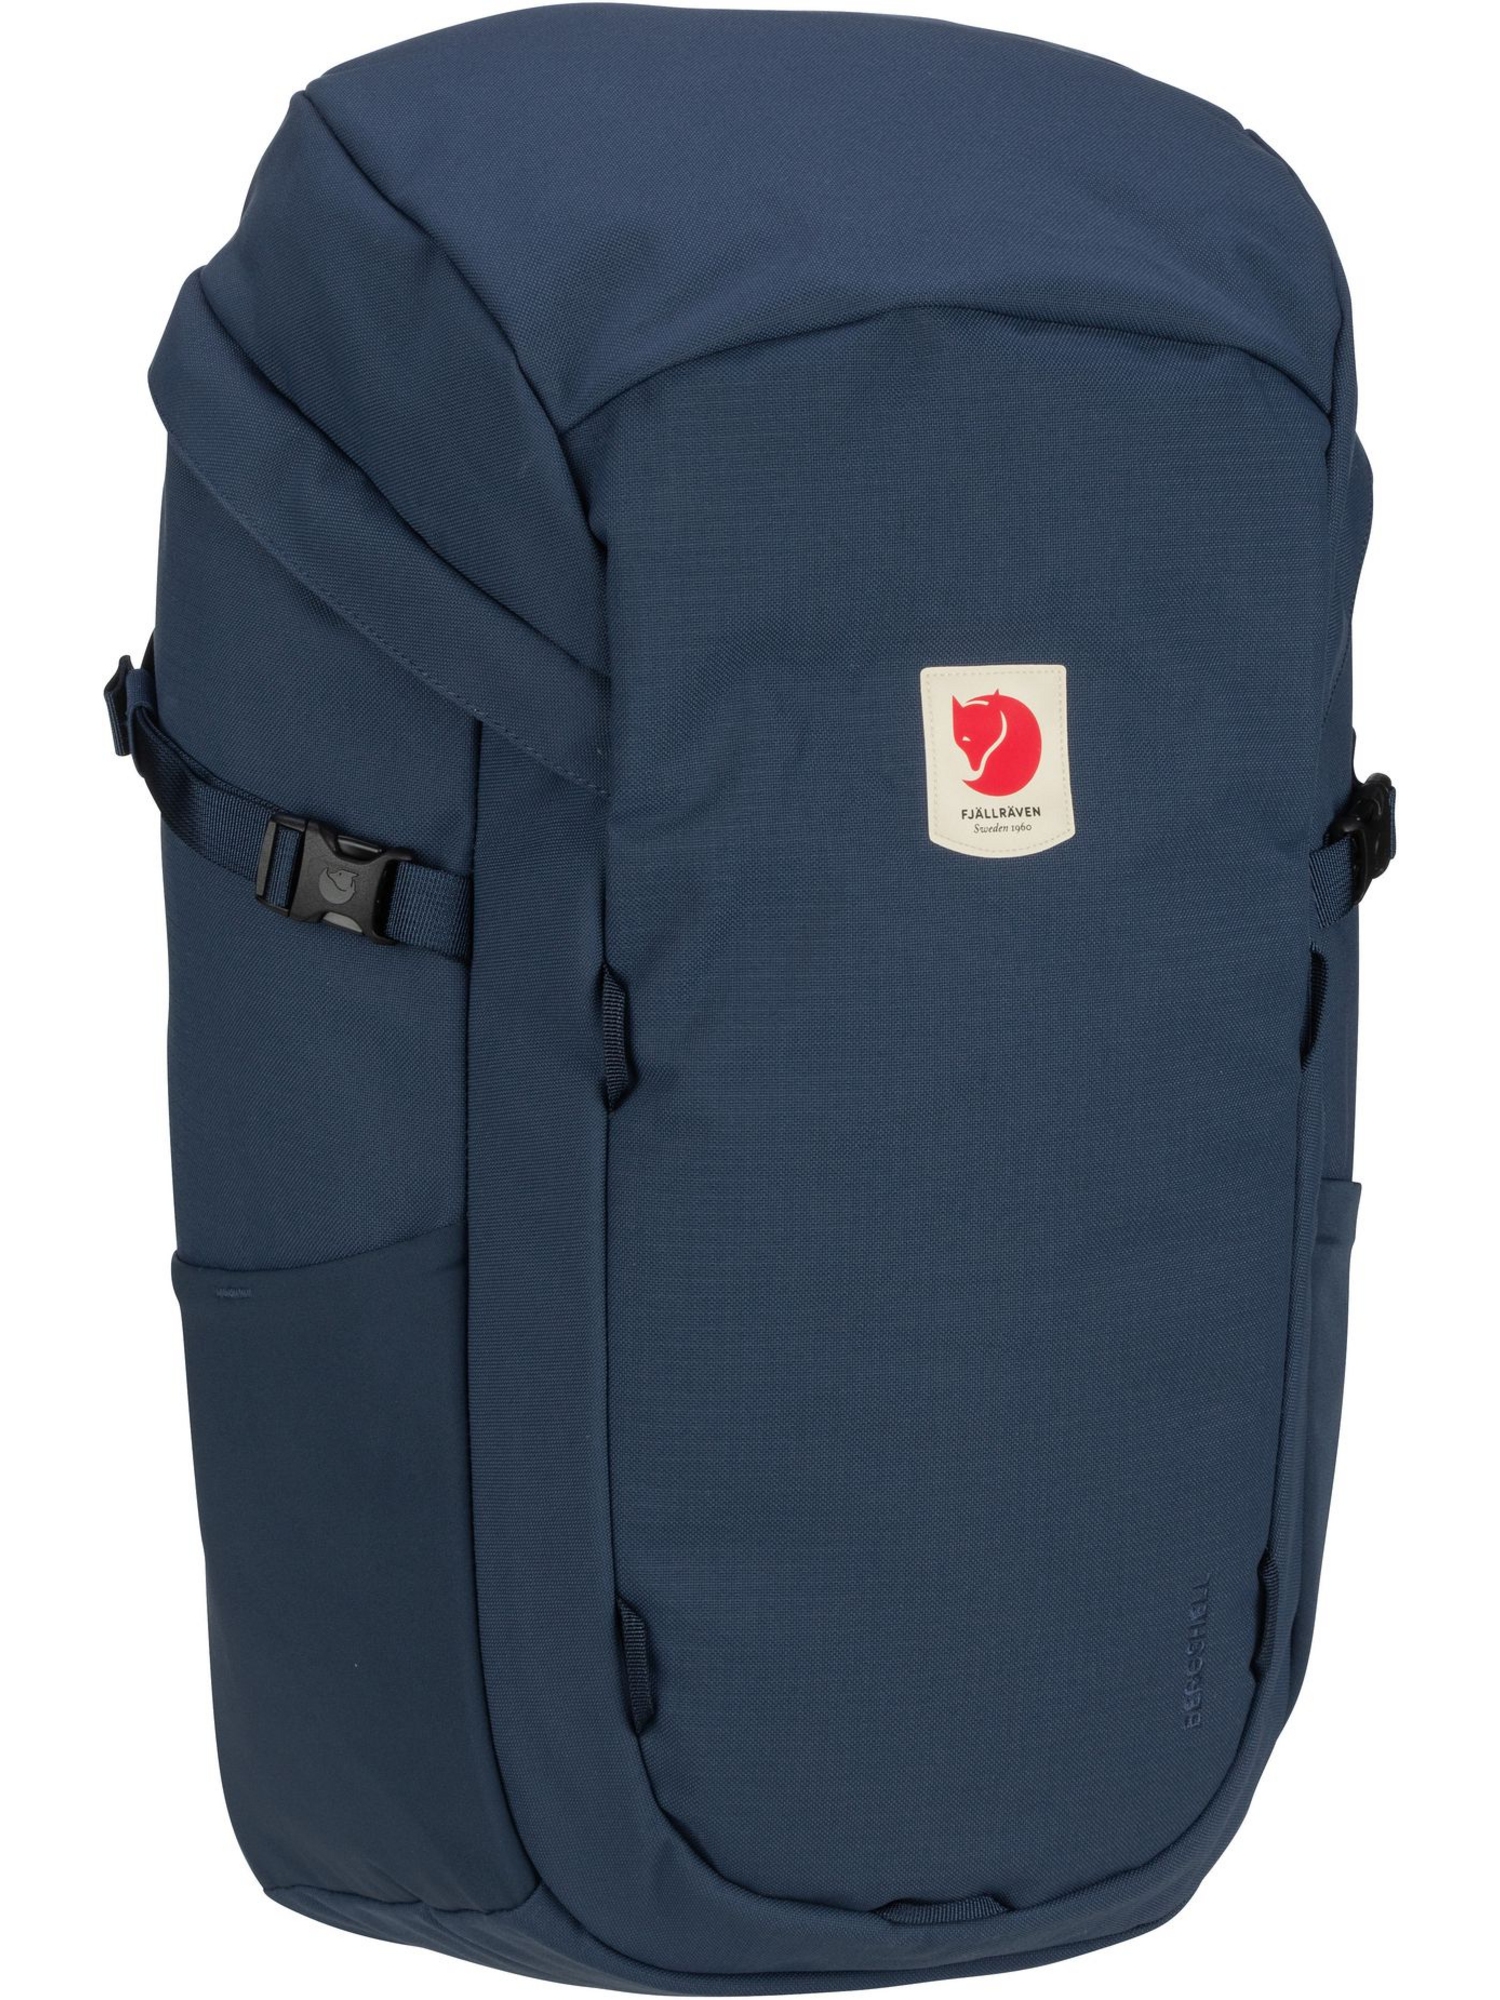 Рюкзак FJÄLLRÄVEN / Backpack Ulvö 30, цвет Mountain Blue сумка рюкзак ulvö среднего размера fjällräven цвет red gold